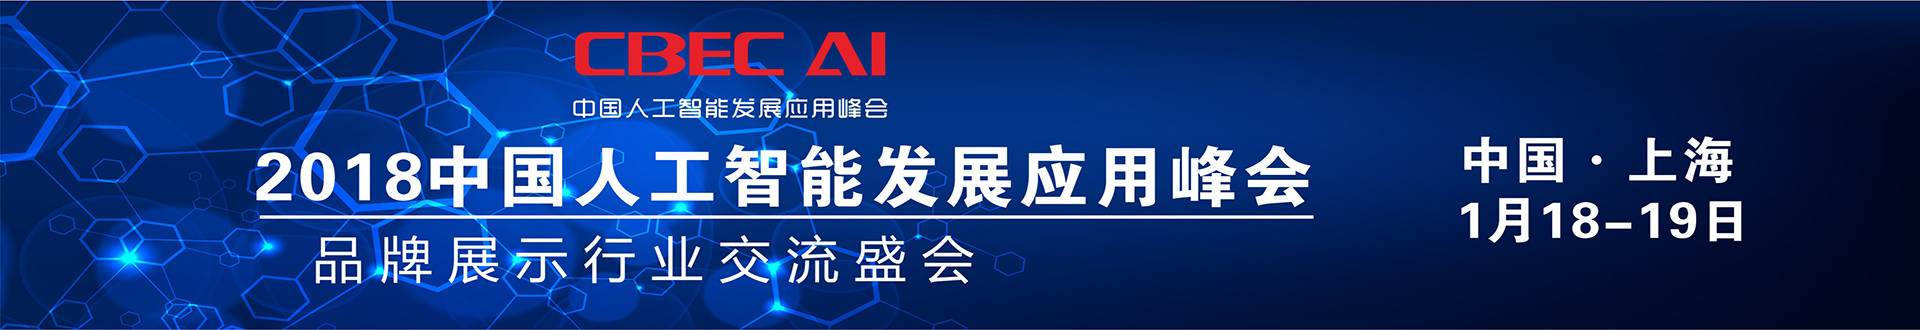 2018 CBEC AI 中国人工智能发展应用峰会